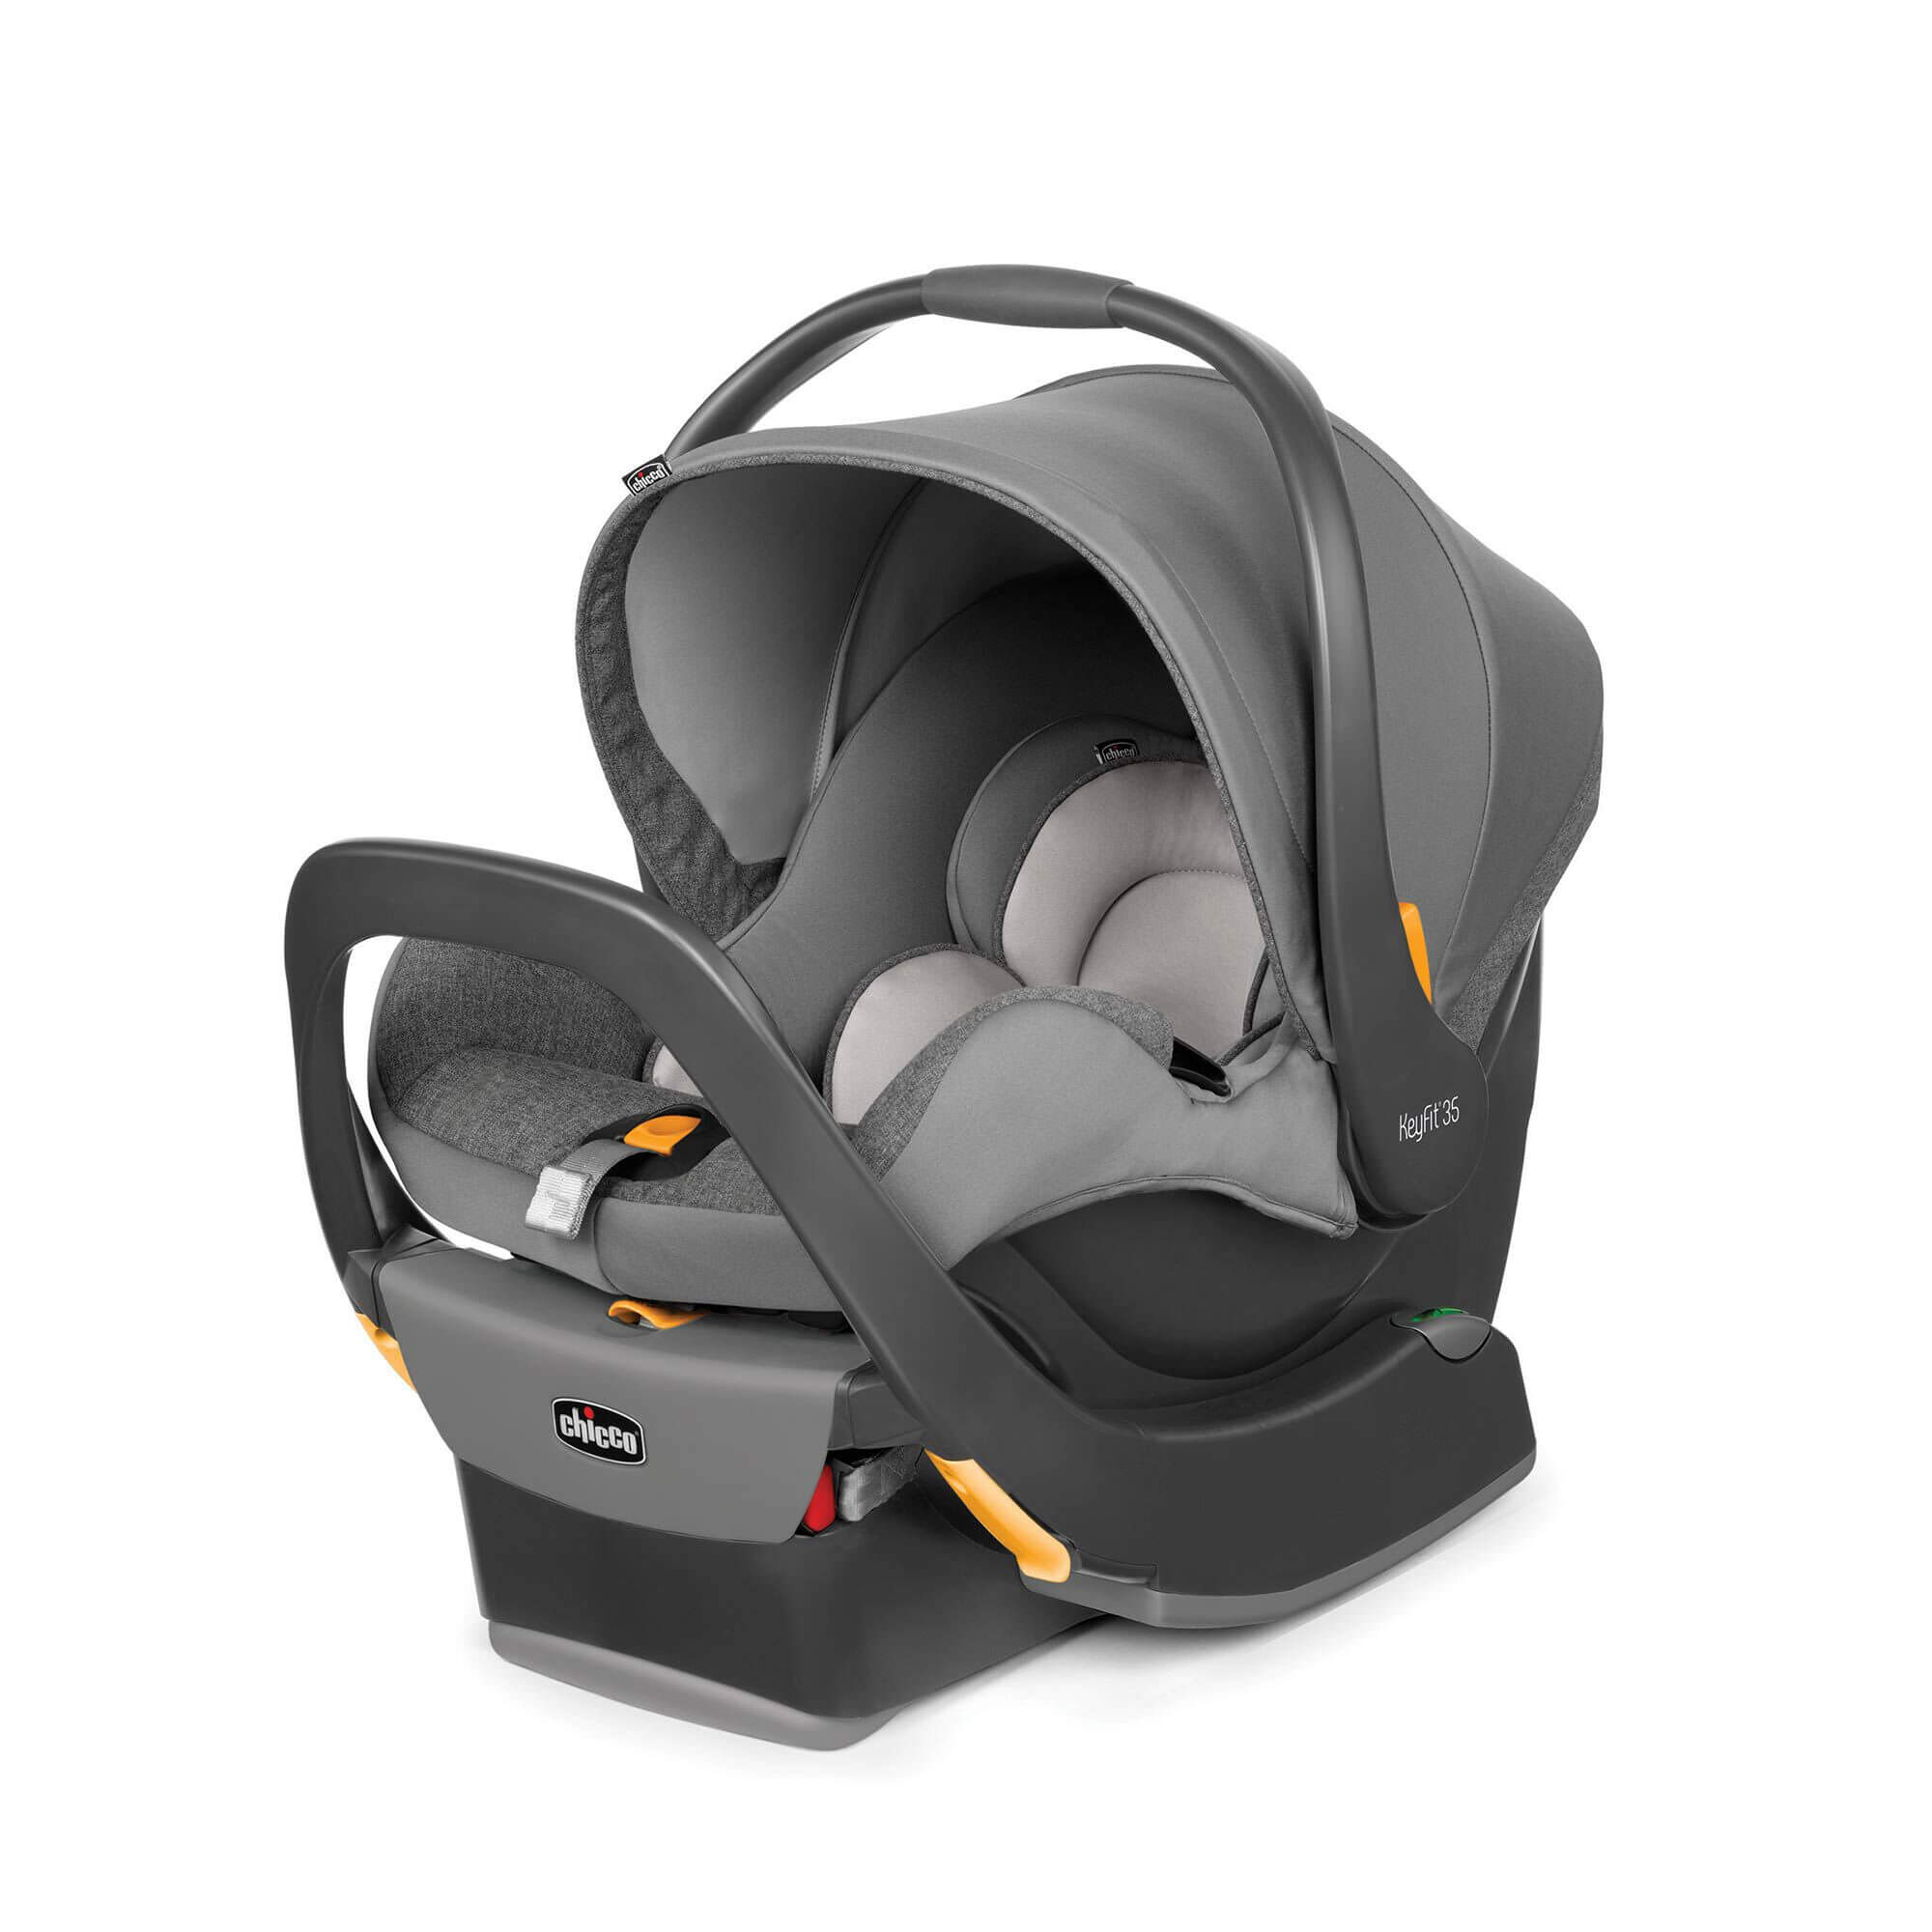 Best Lightweight Infant Car Seat - Chicco KeyFit 35